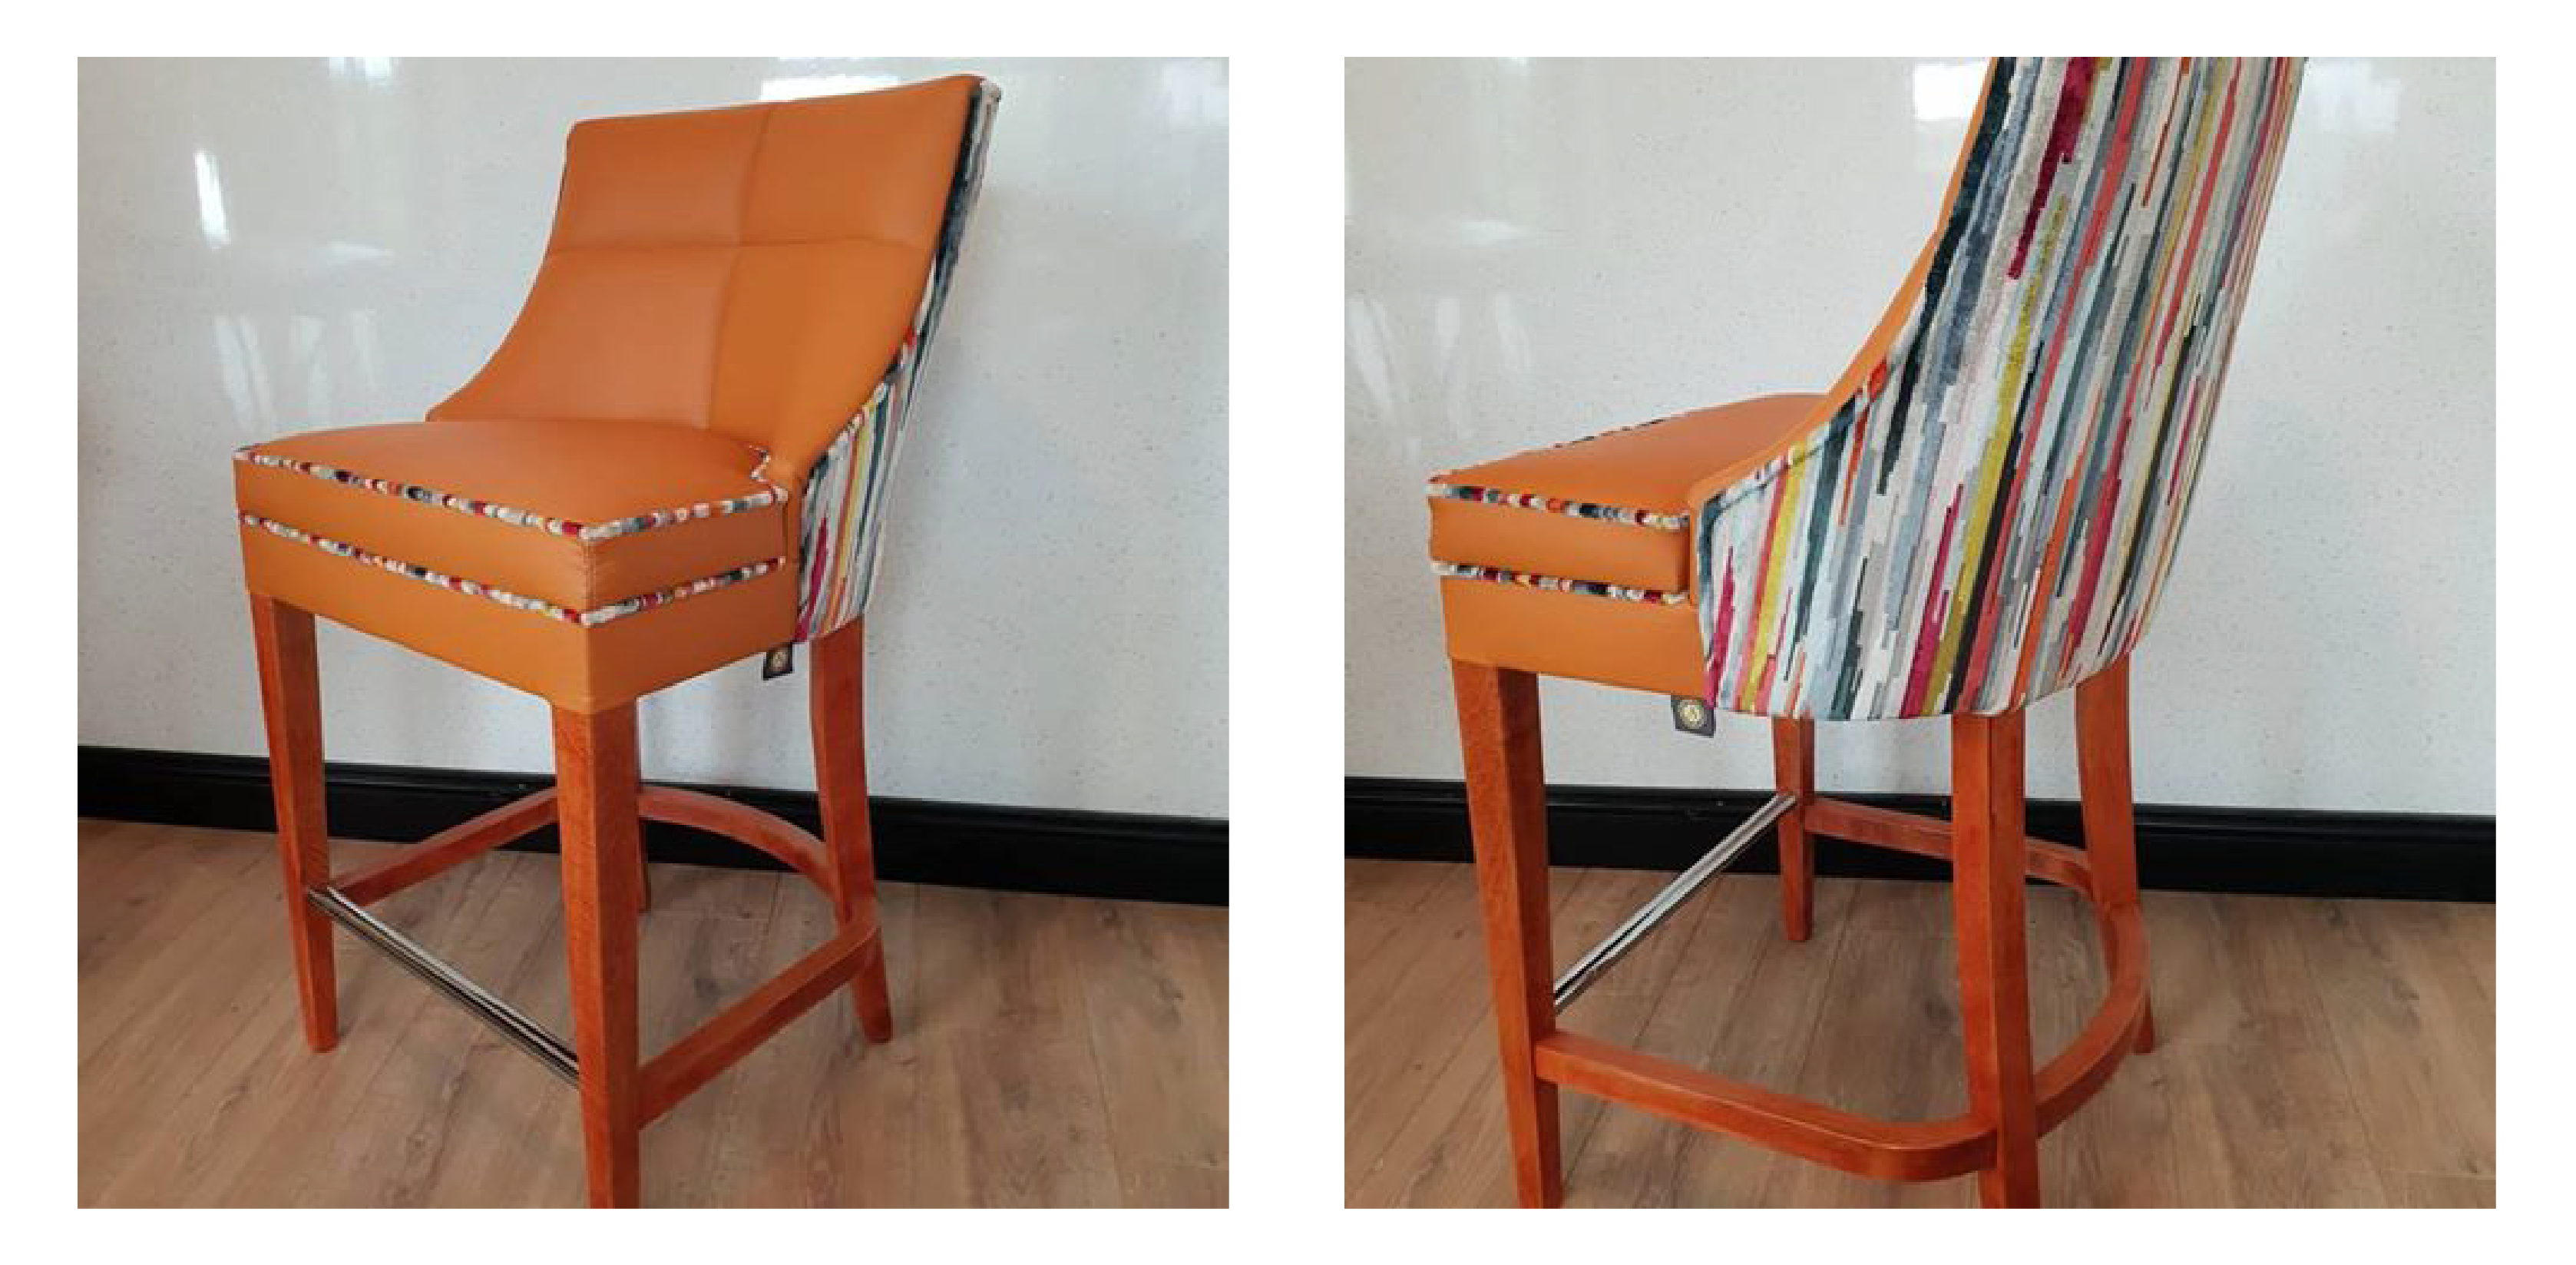 Seating using Yarwood Leather's Style leather in Burnt Orange